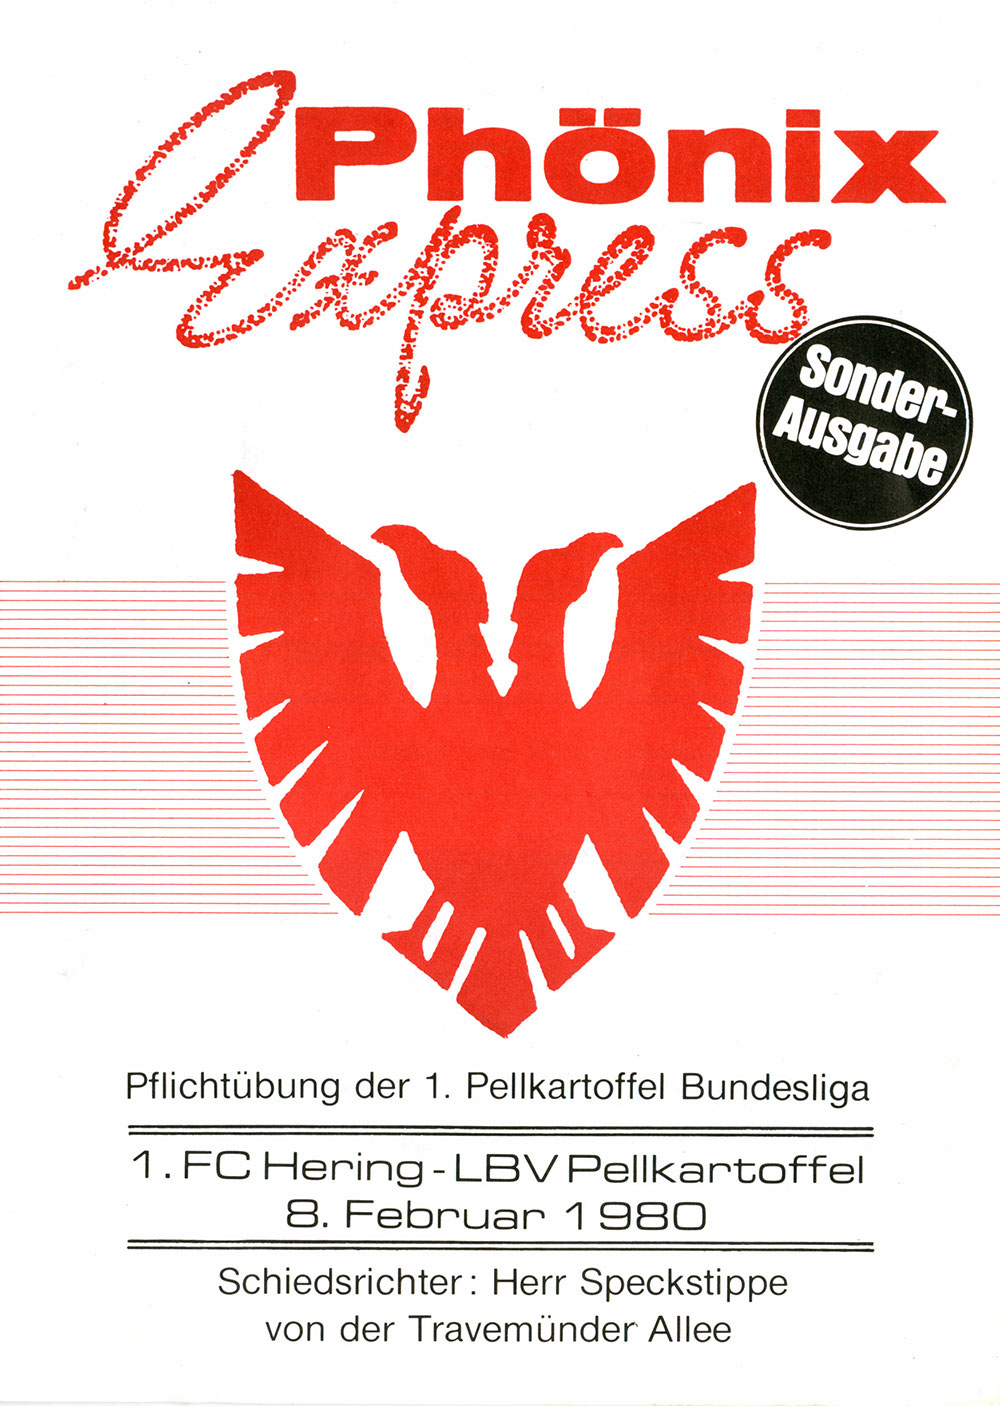 Der PHÖNIX EXPRESS, Sonderheft v. 8.2.1980